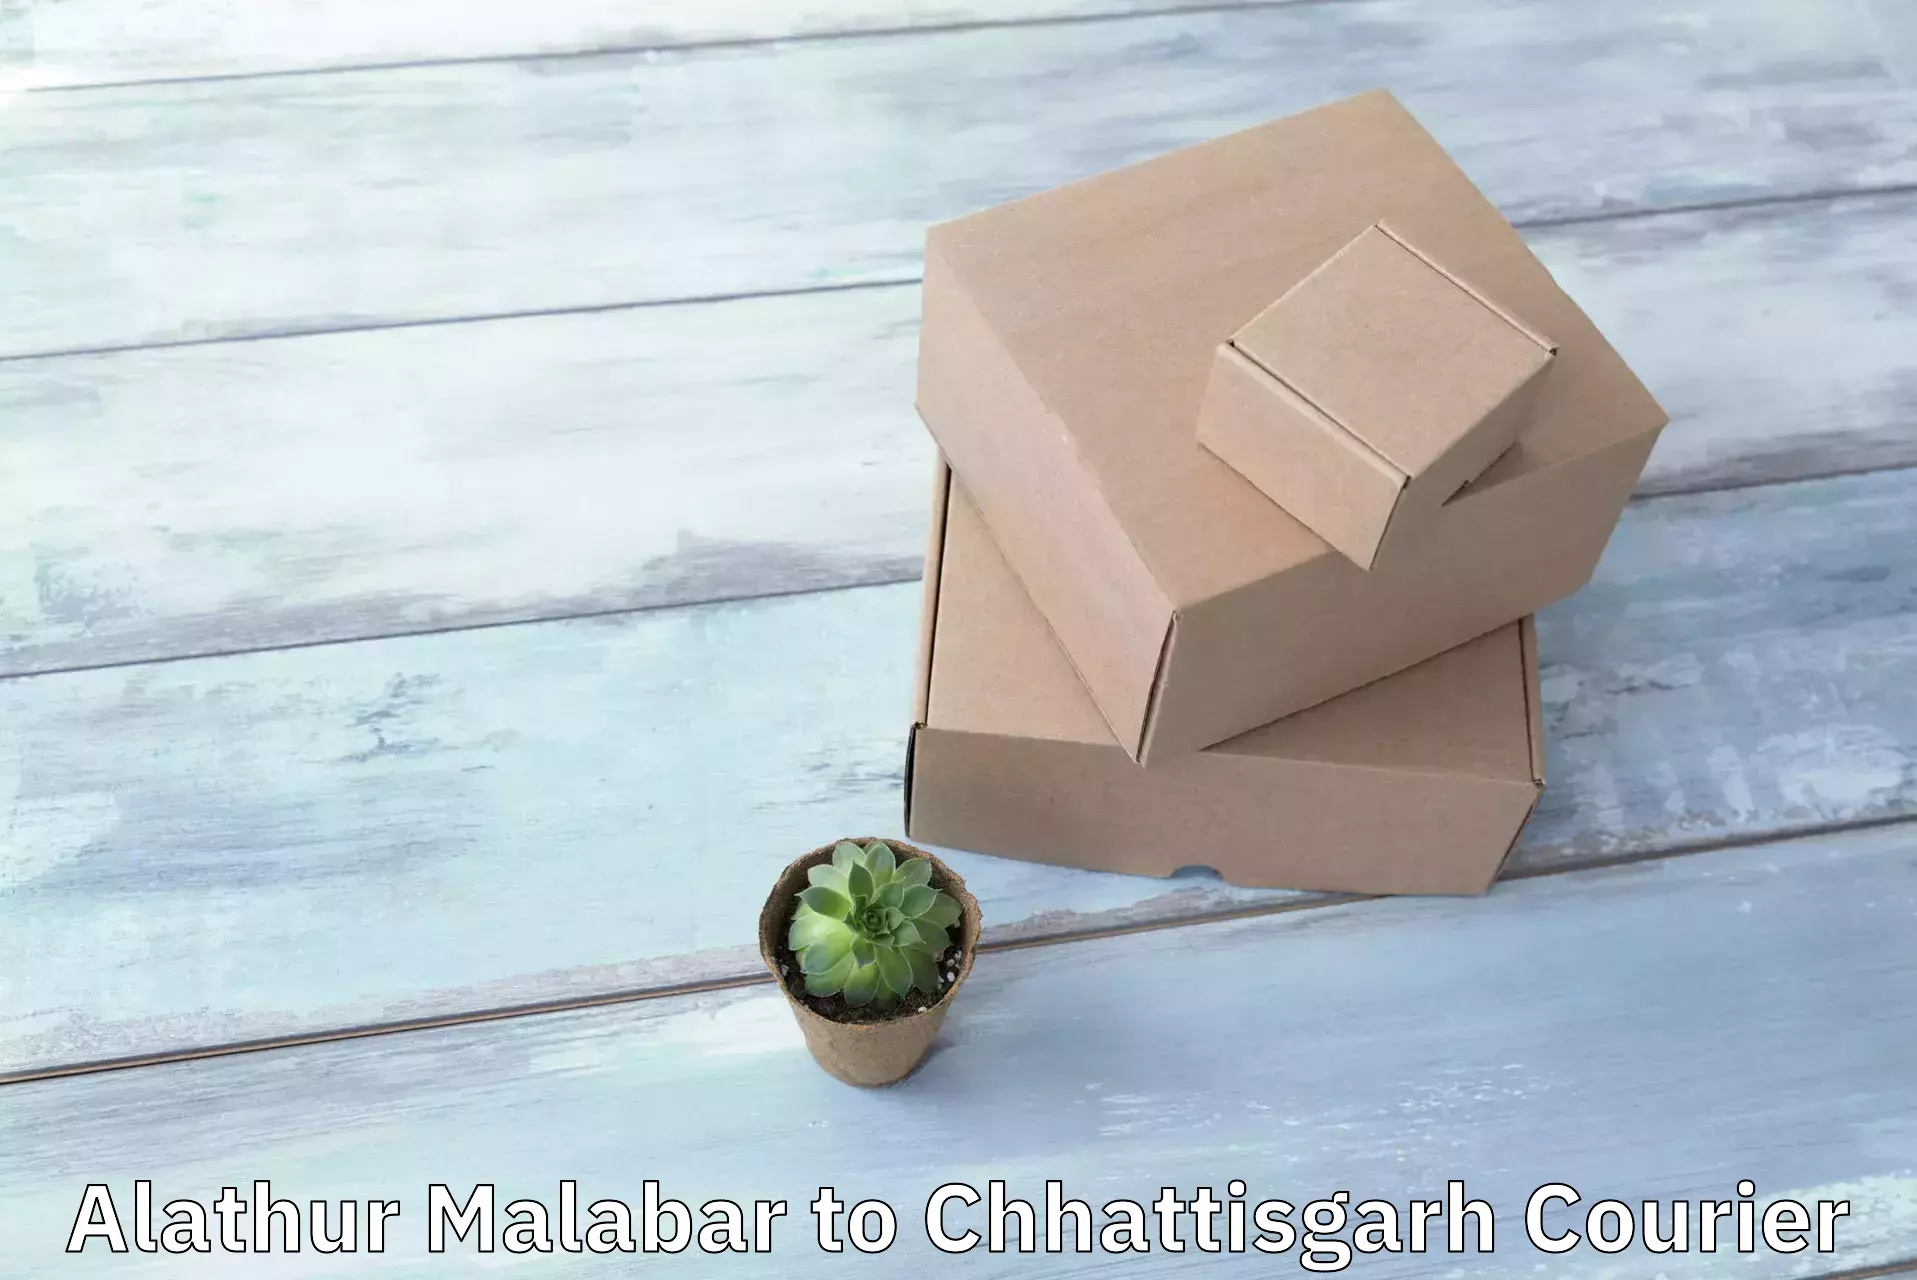 Customizable delivery plans Alathur Malabar to Bijapur Chhattisgarh